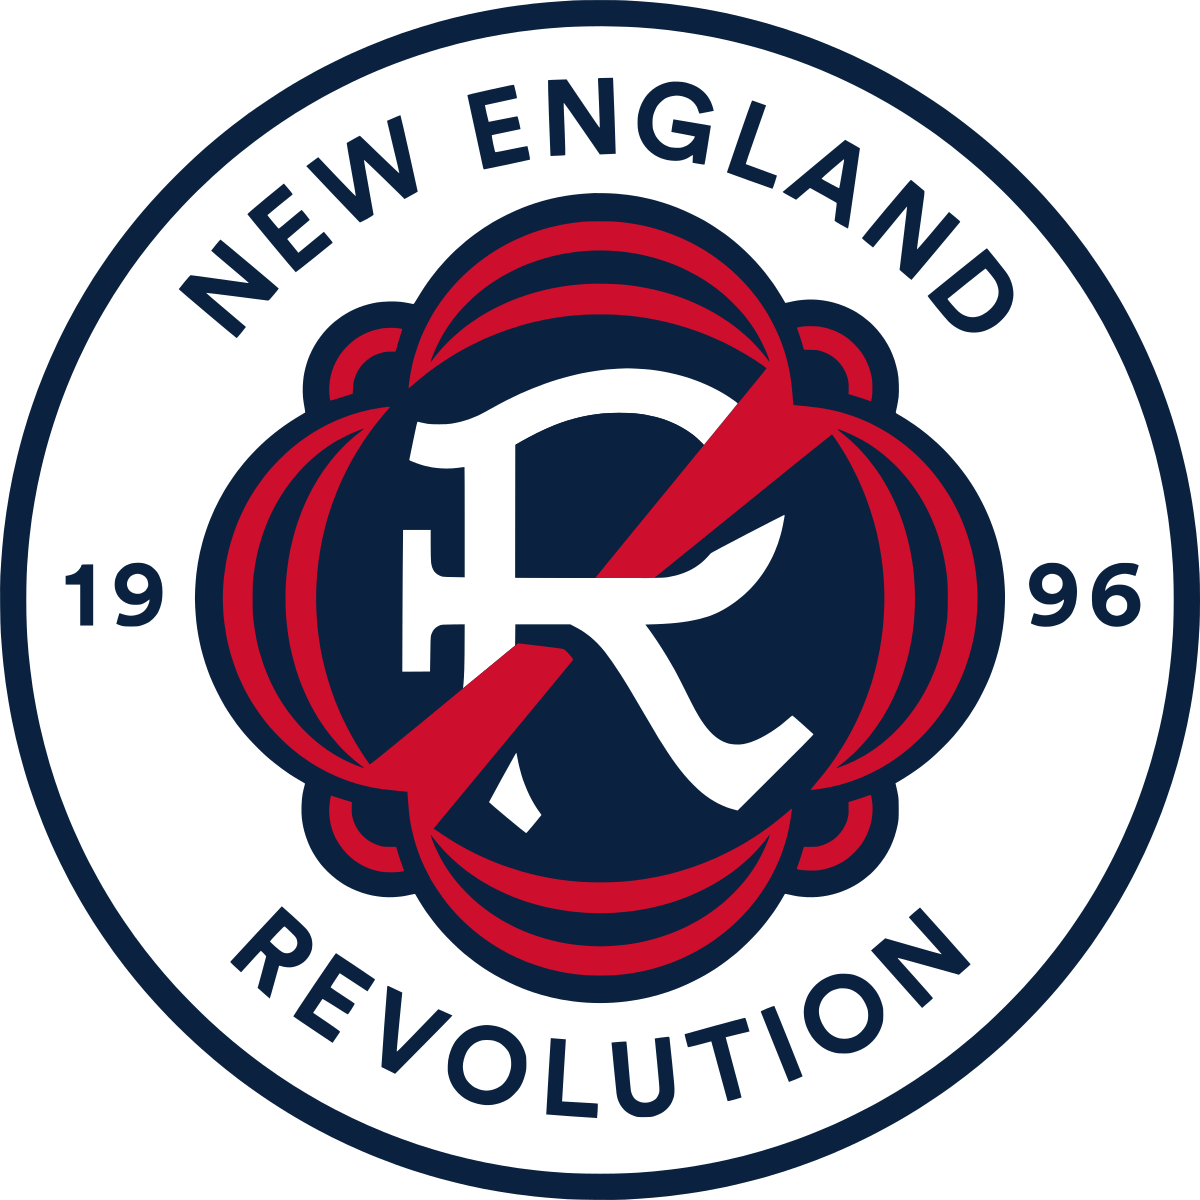 New England Revolution address future after Bruce Arena's resignation